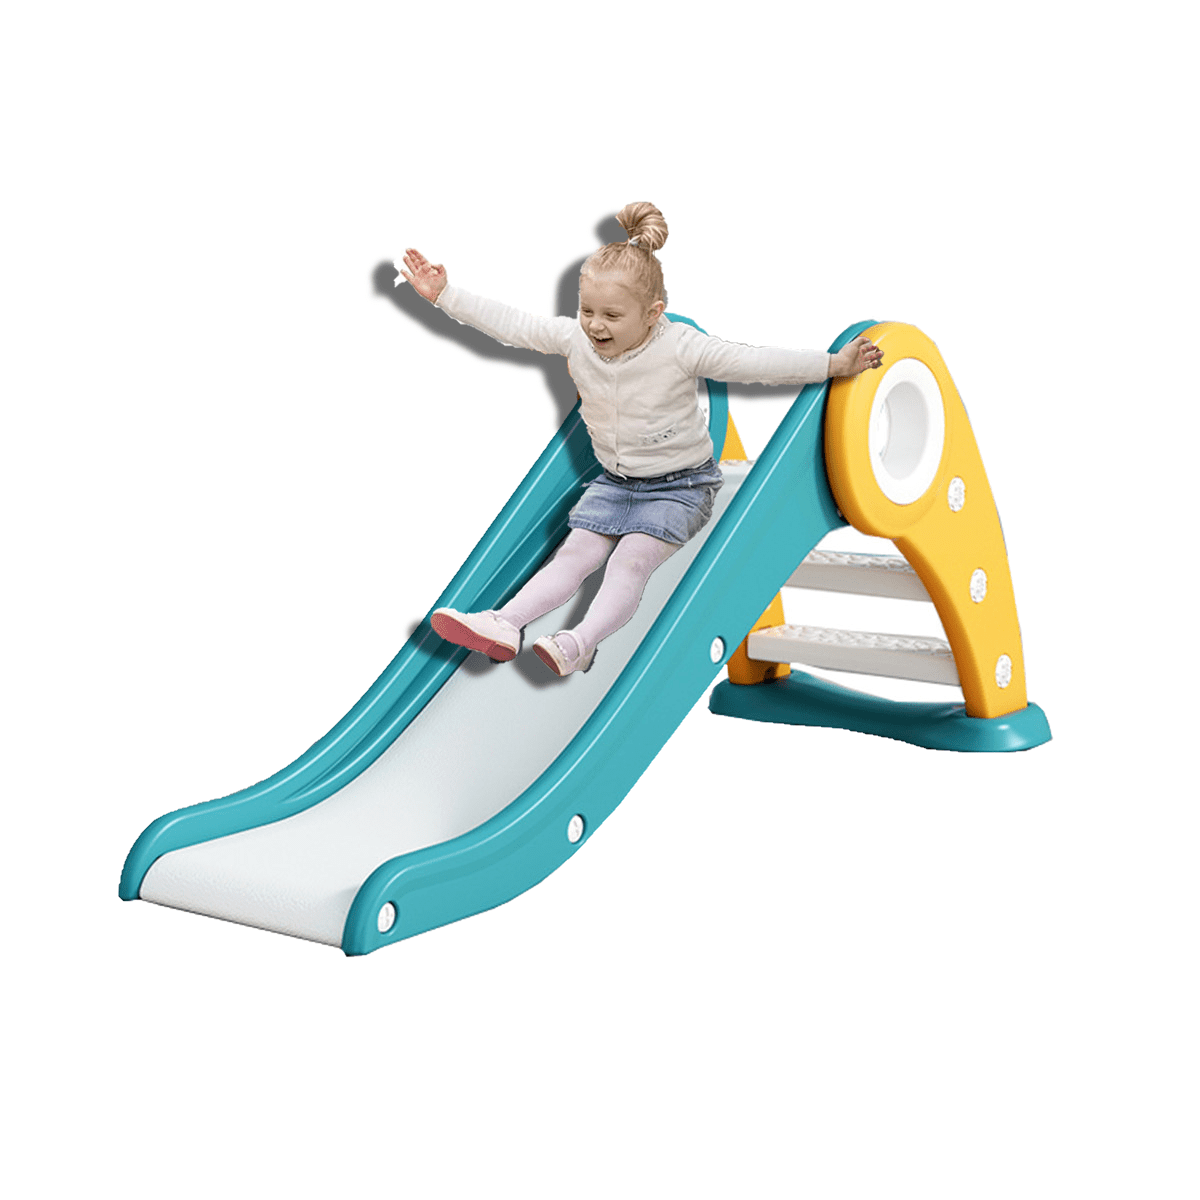 Details about   2 in 1 Baby Slide Kids Children Climber Slide Toddler Play Slide Playground Toy 